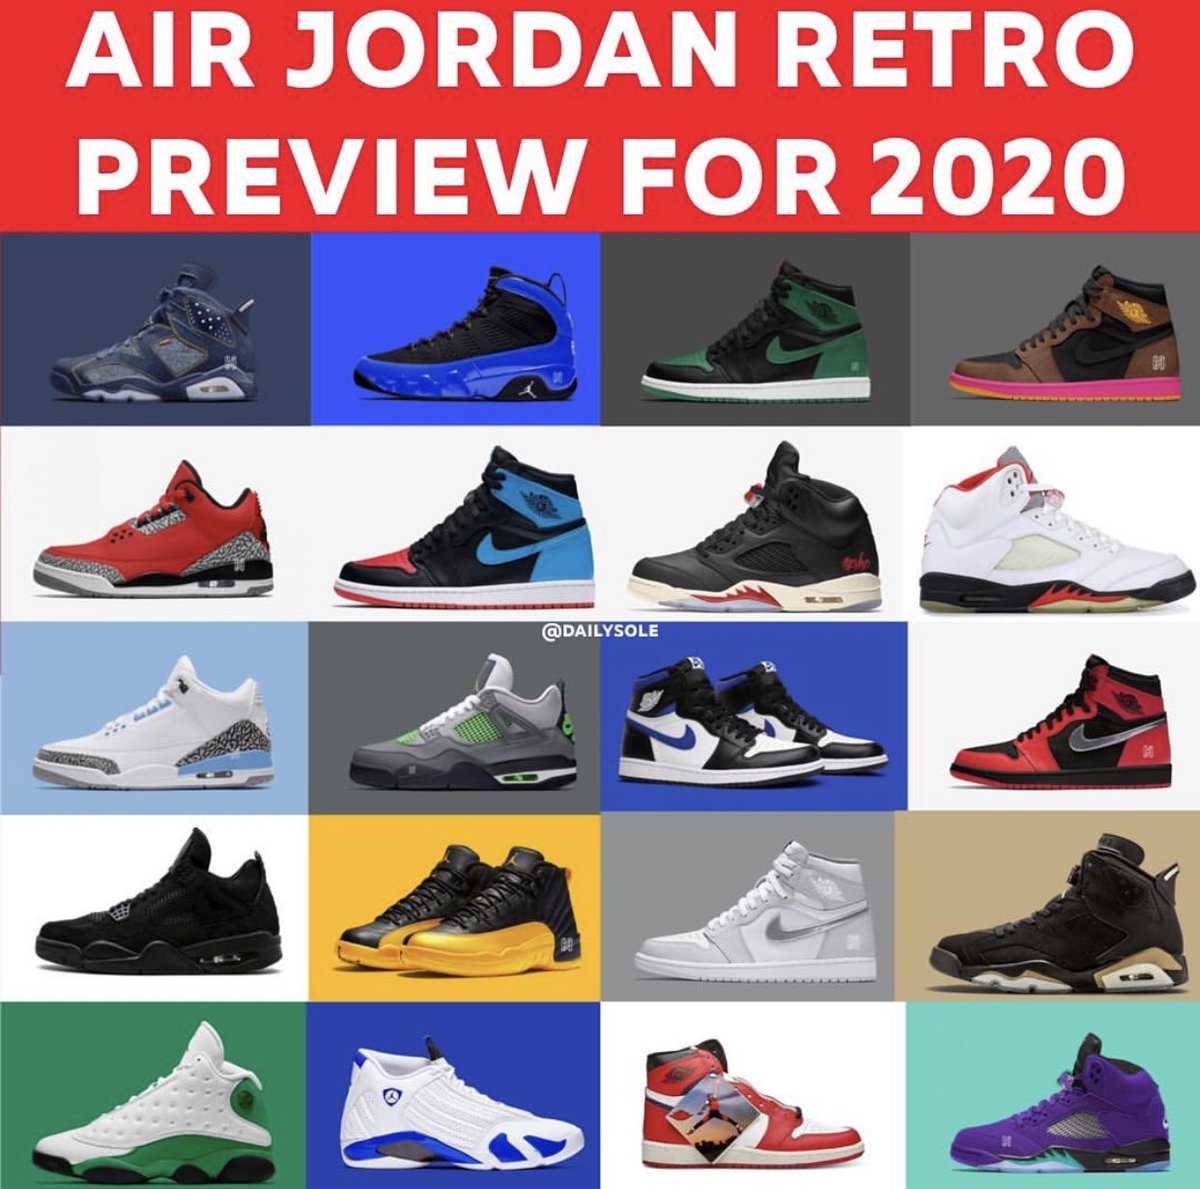 jordans to be released in 2020